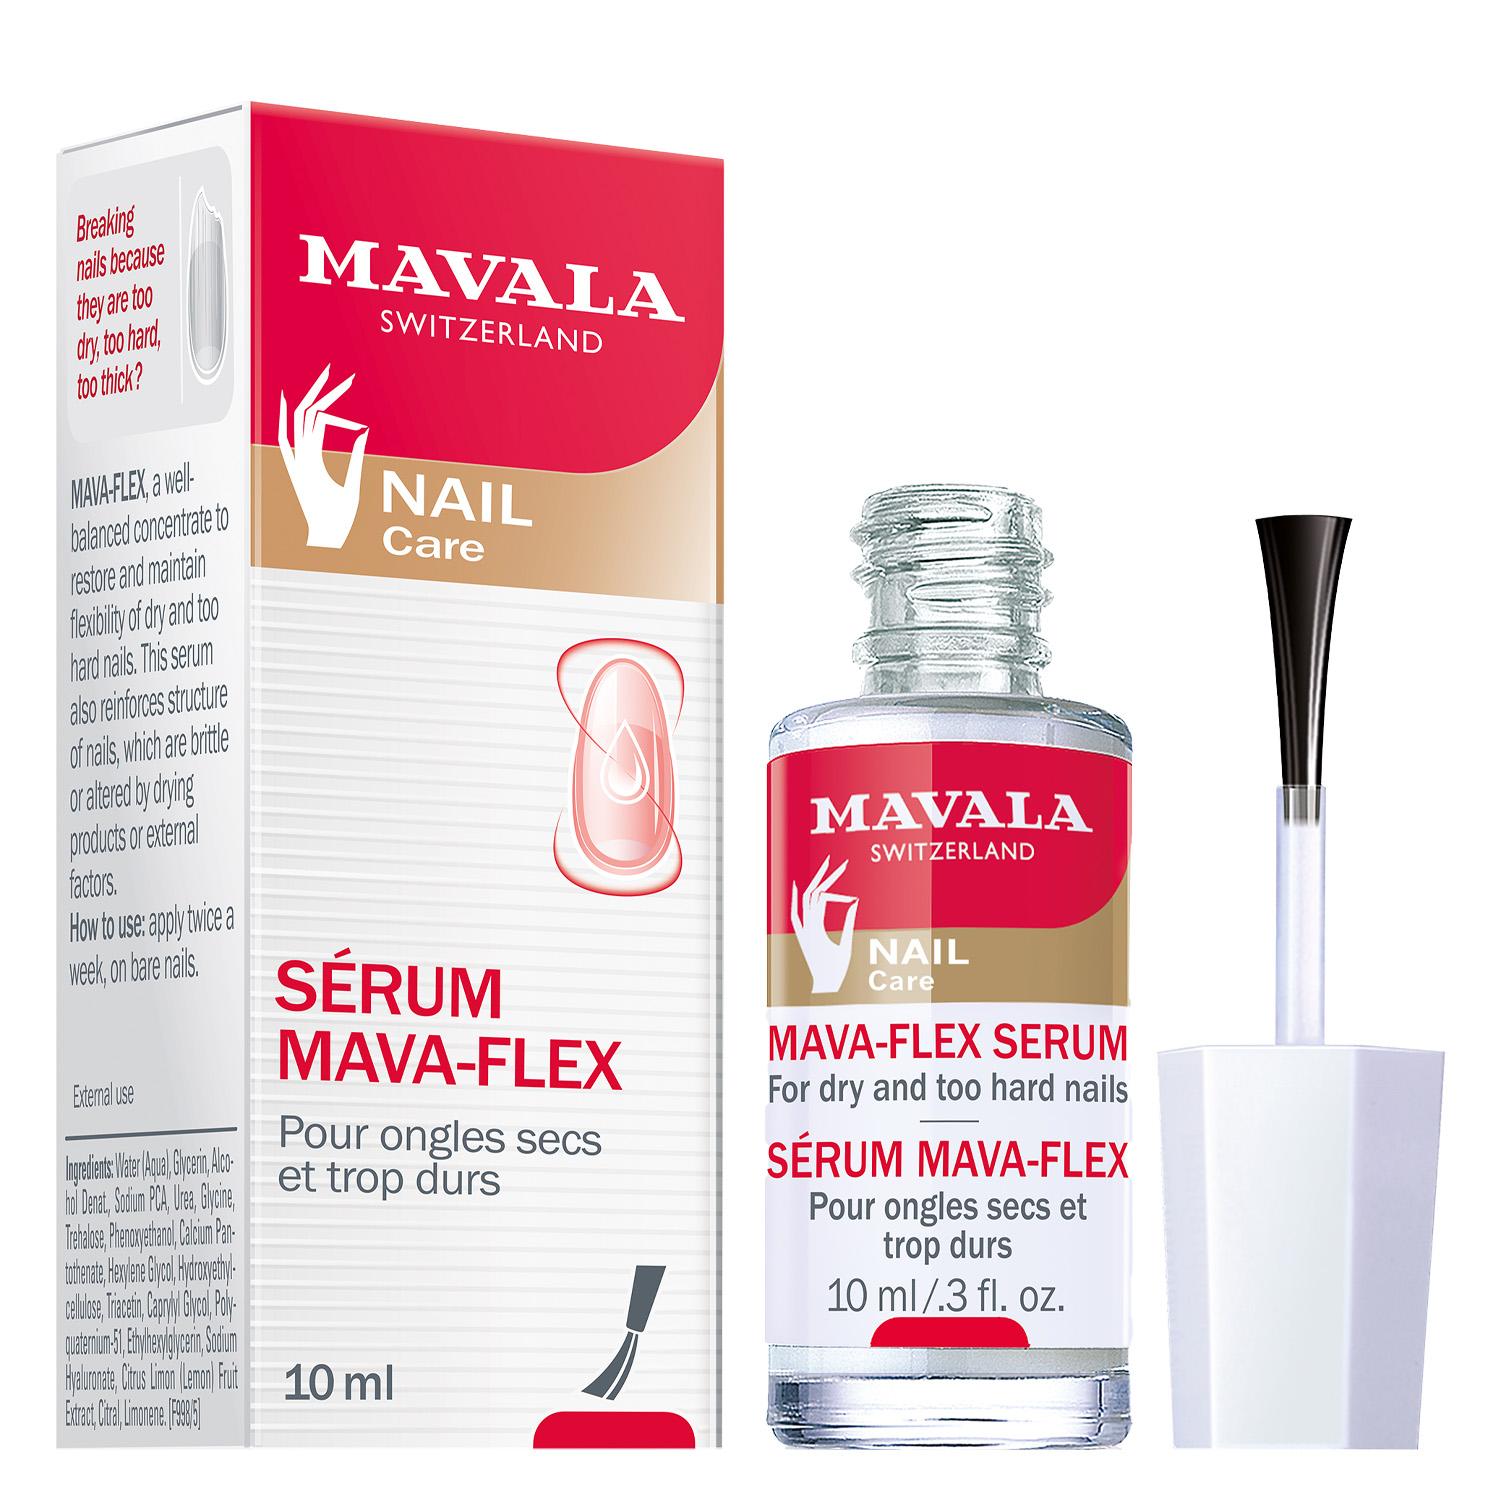 MAVALA Care - Mava-Flex serum for nails